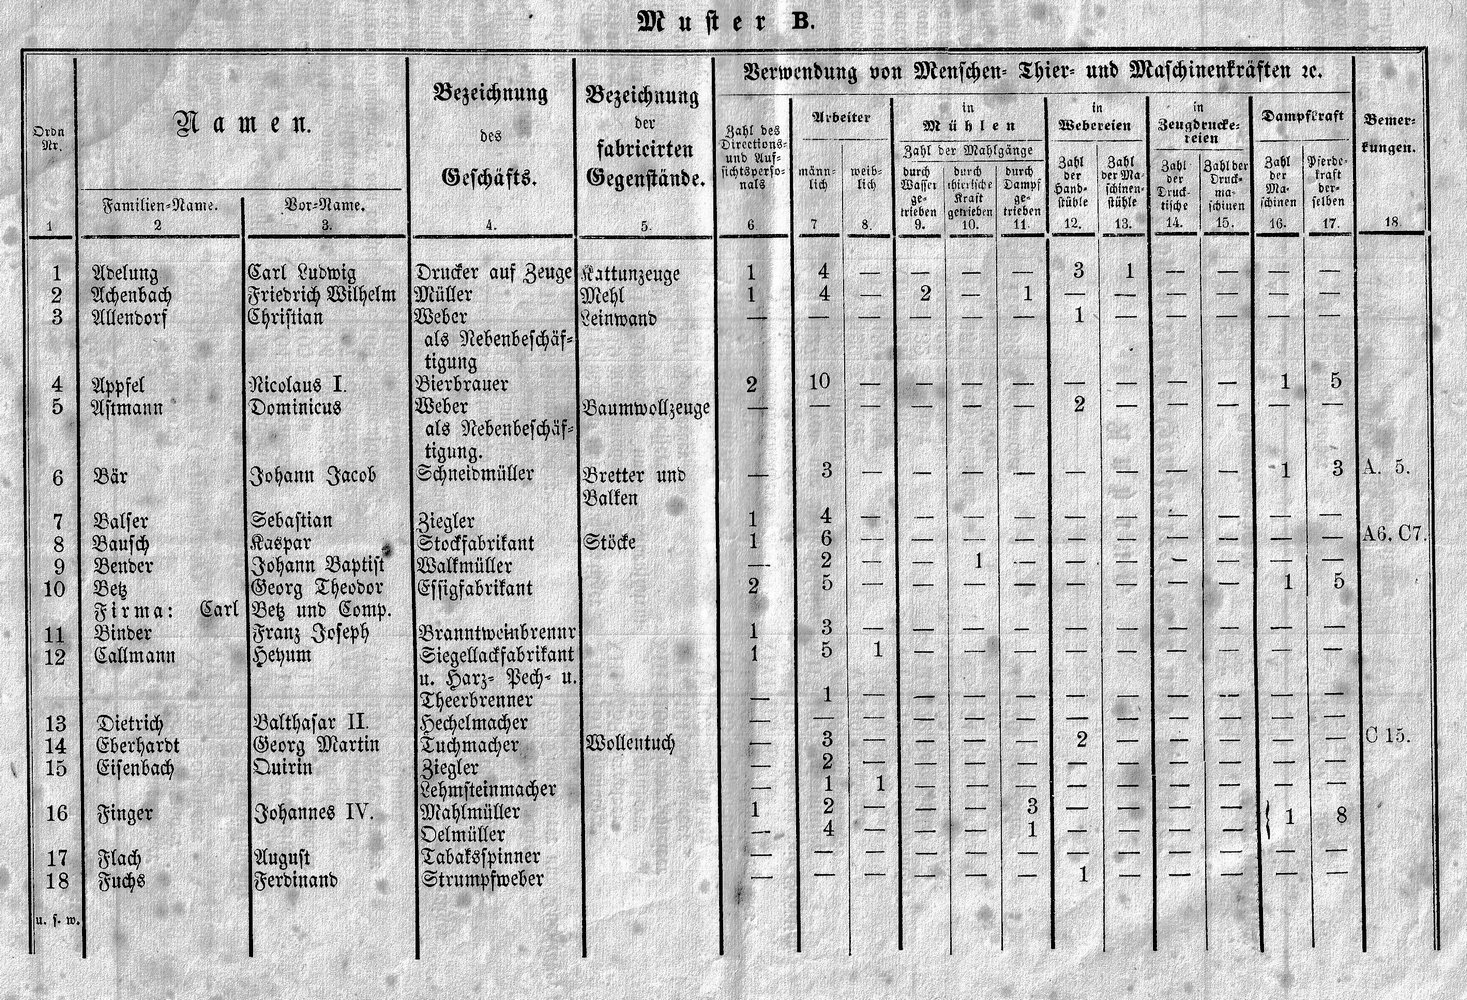 Gewerbestatistik Hessen 1861 (Kulturverein Guntersblum CC BY-NC-SA)